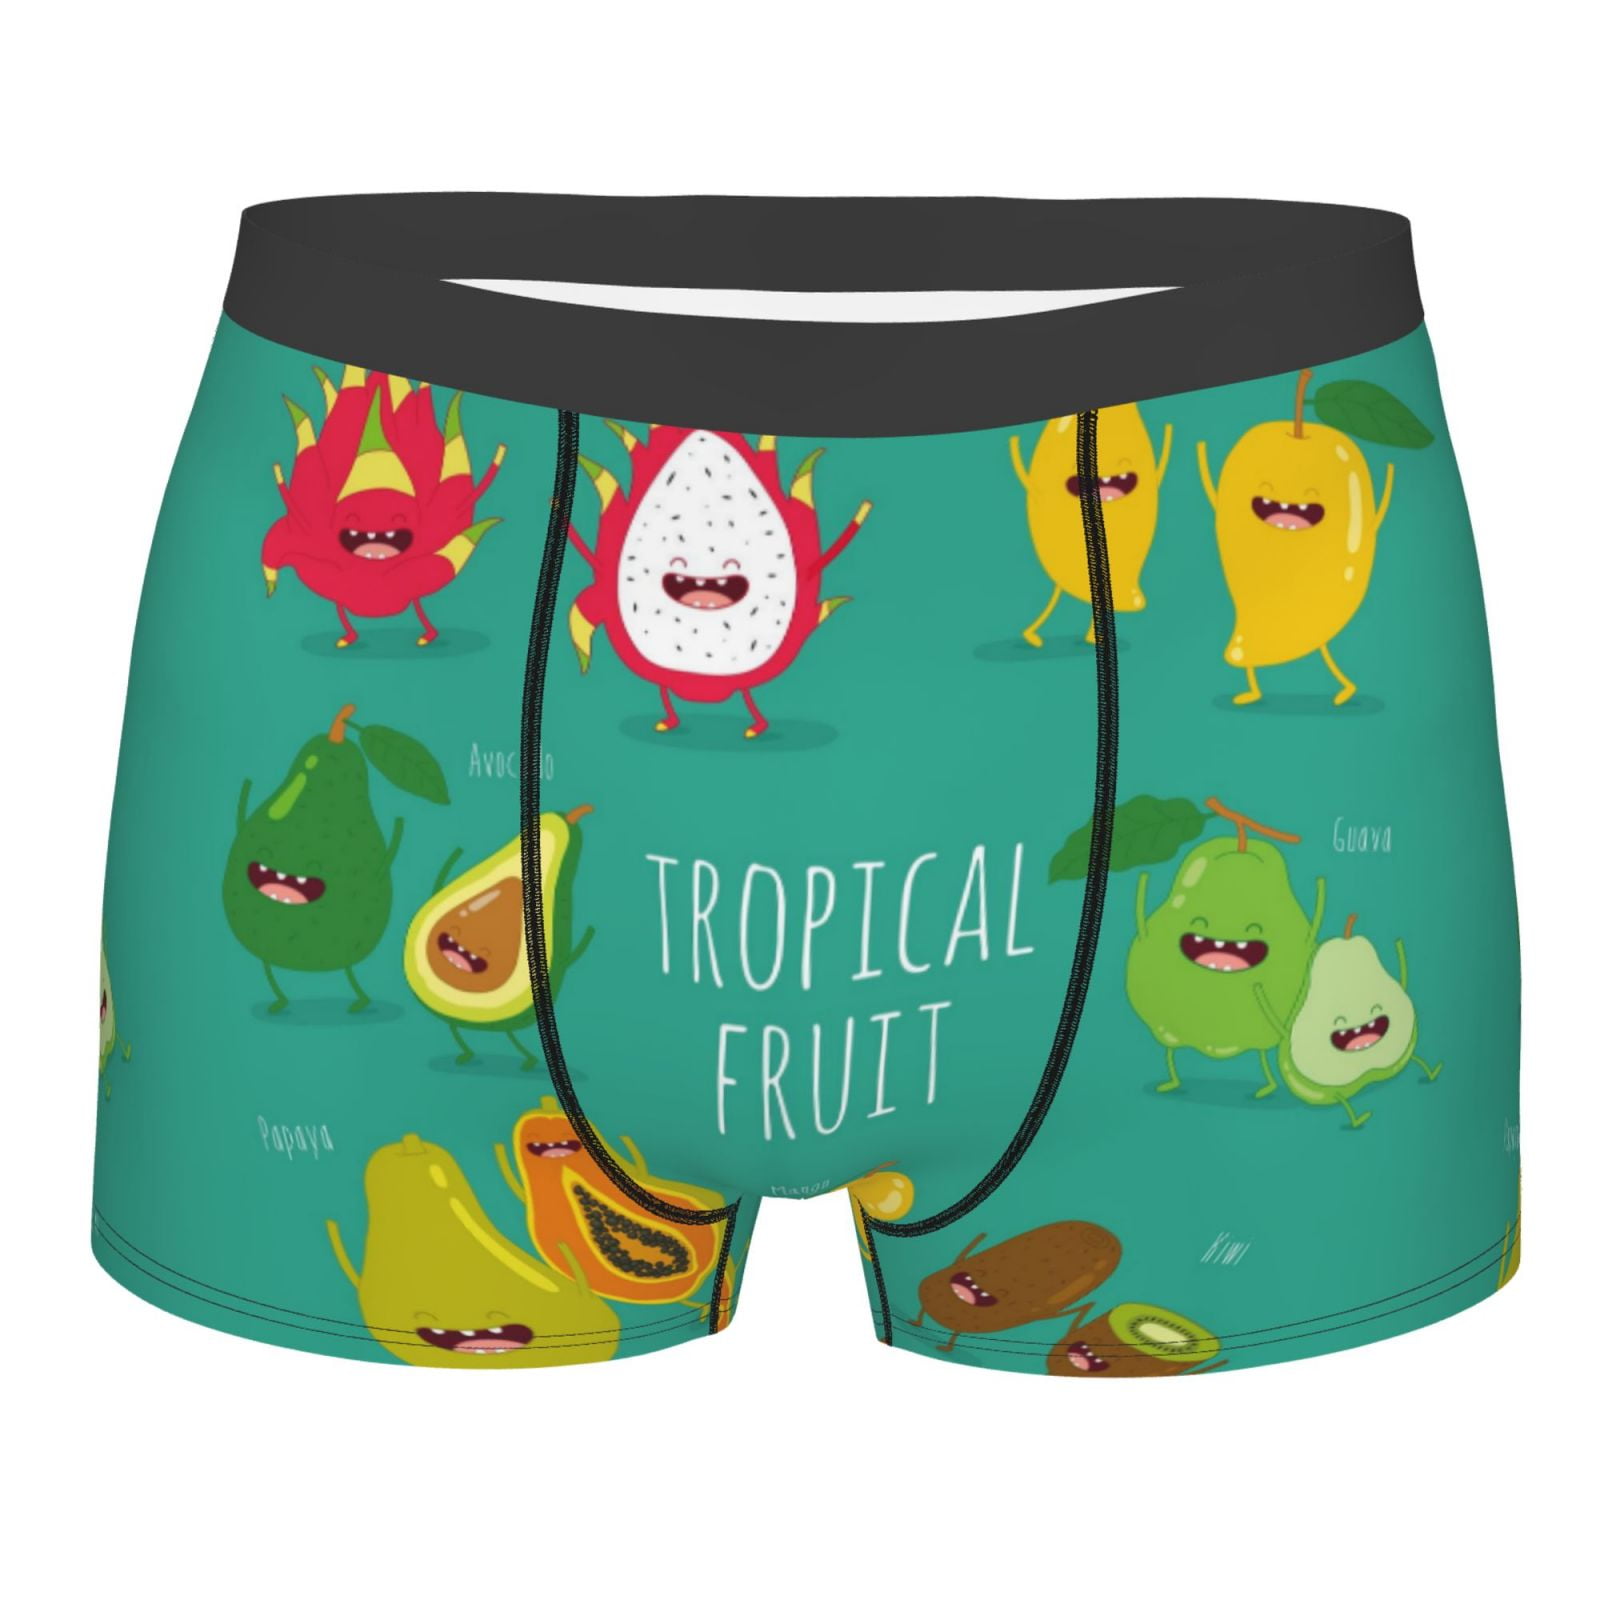 Kll Tropical Fruit Men'S Cotton Boxer Briefs Underwear-Small